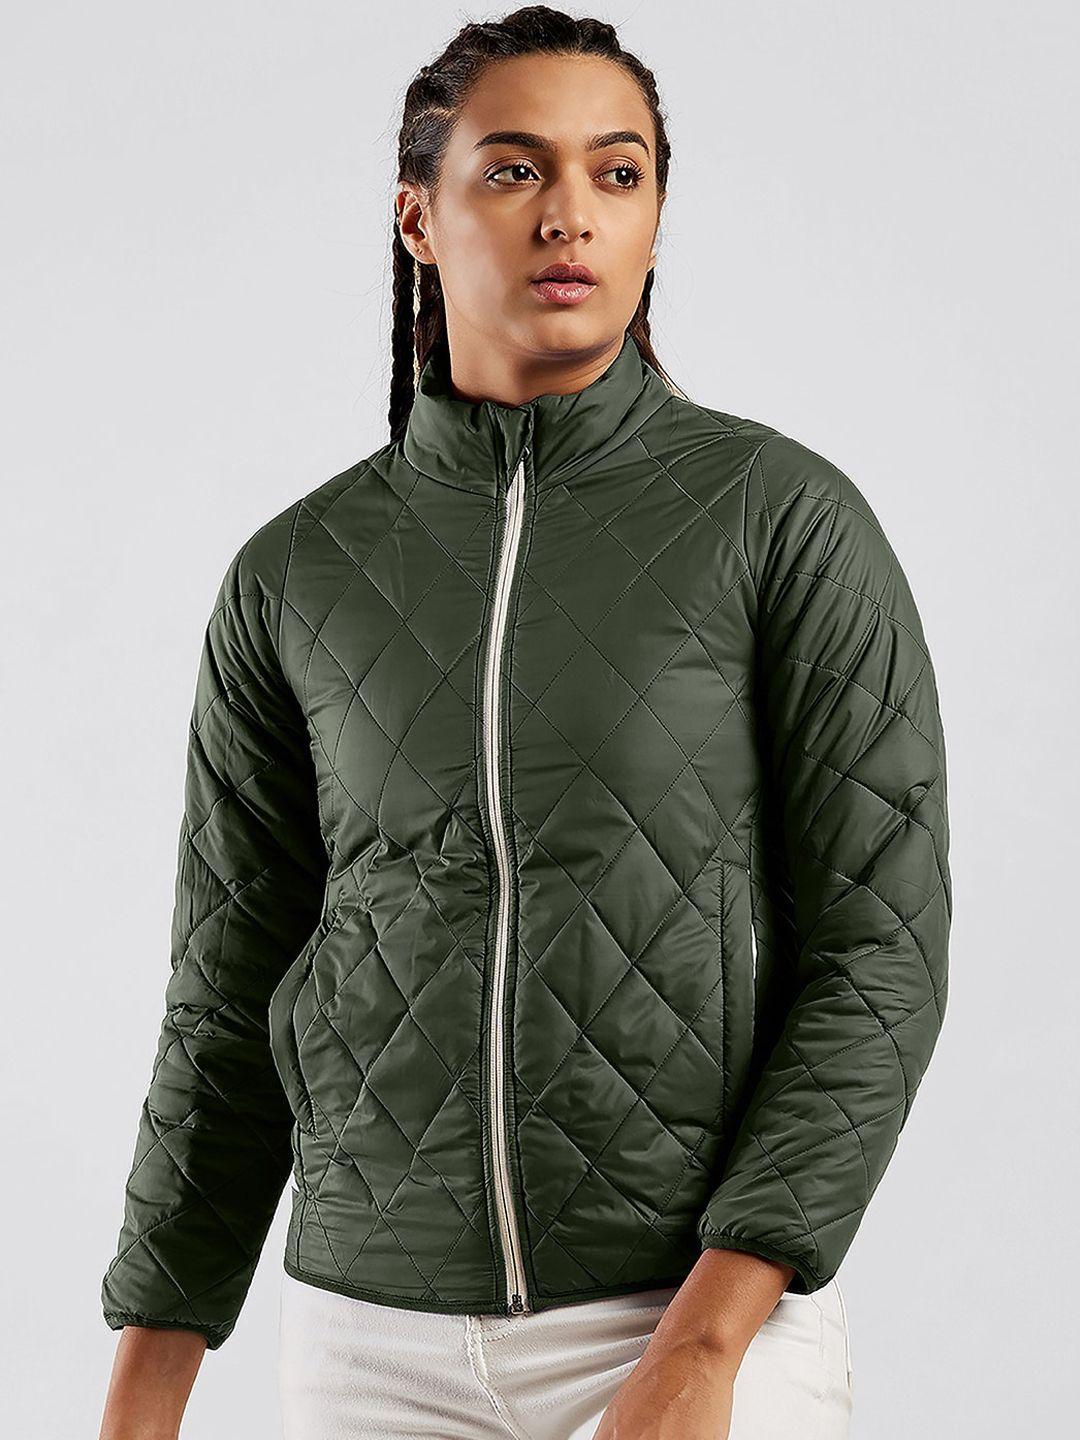 unpar-women-olive-green-outdoor-quilted-jacket